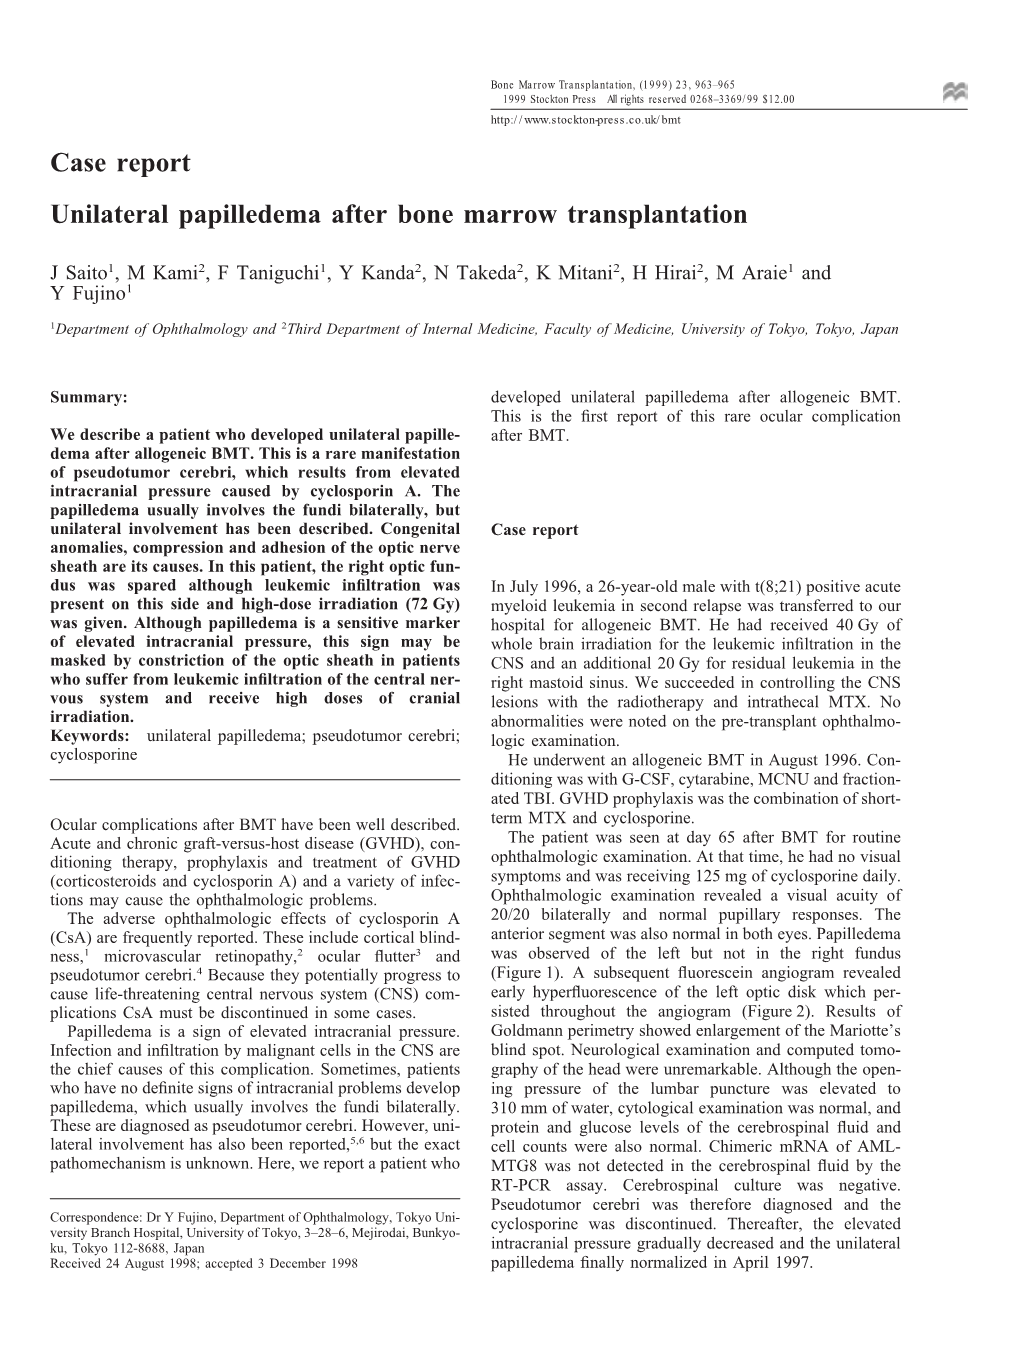 Case Report Unilateral Papilledema After Bone Marrow Transplantation